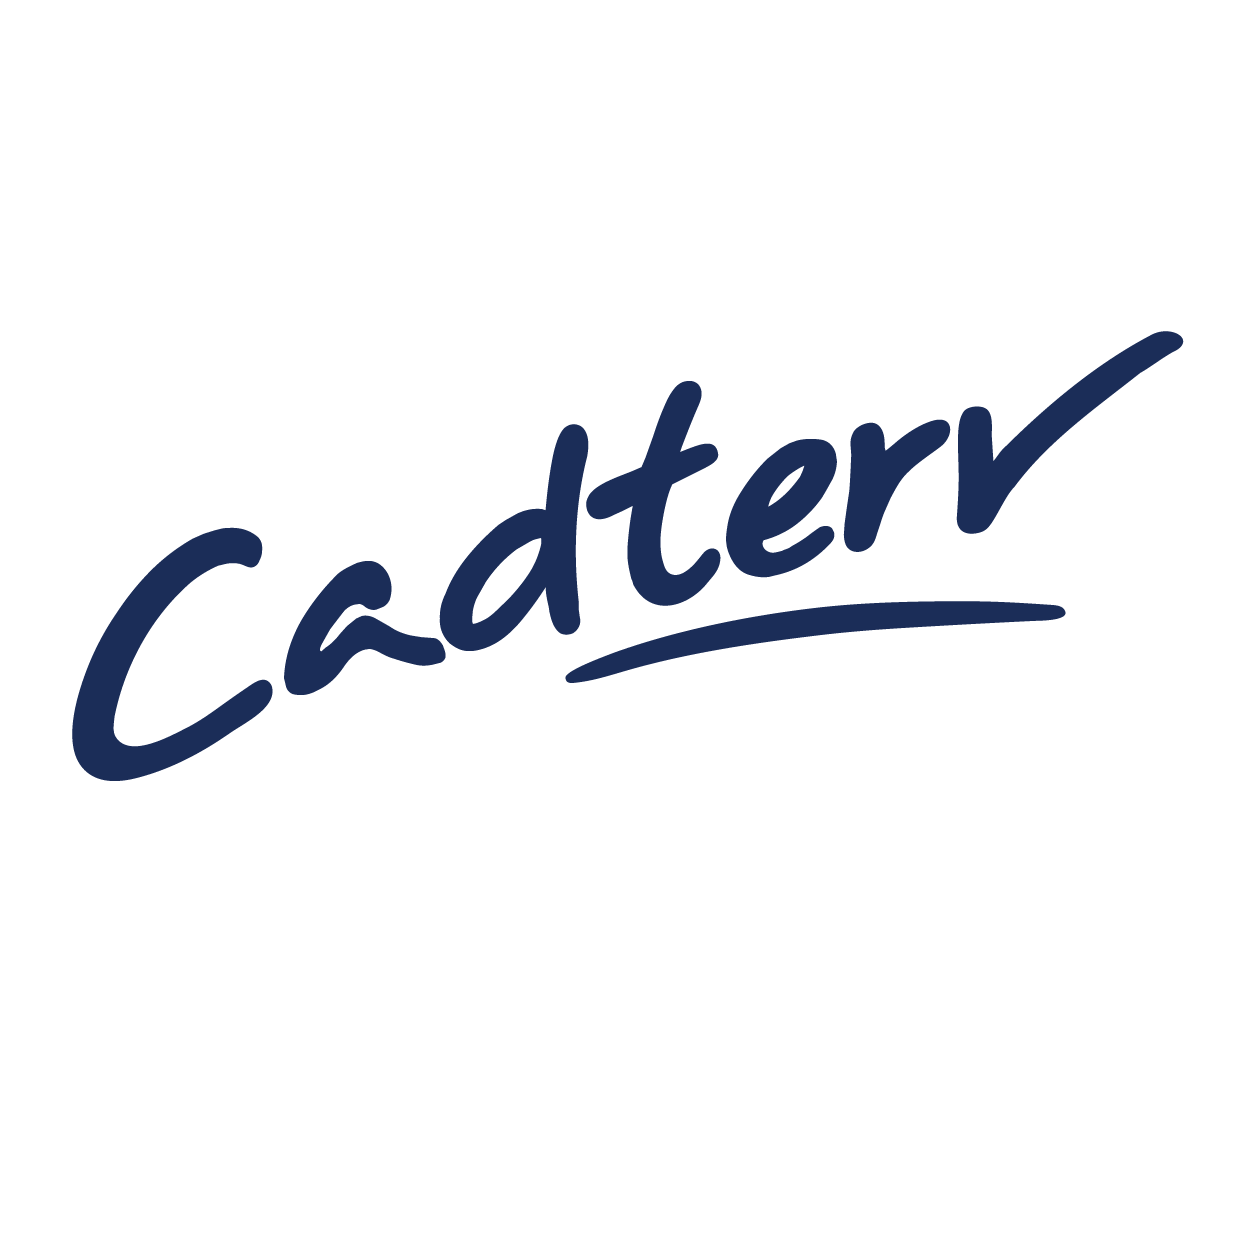 A Cadterv logója